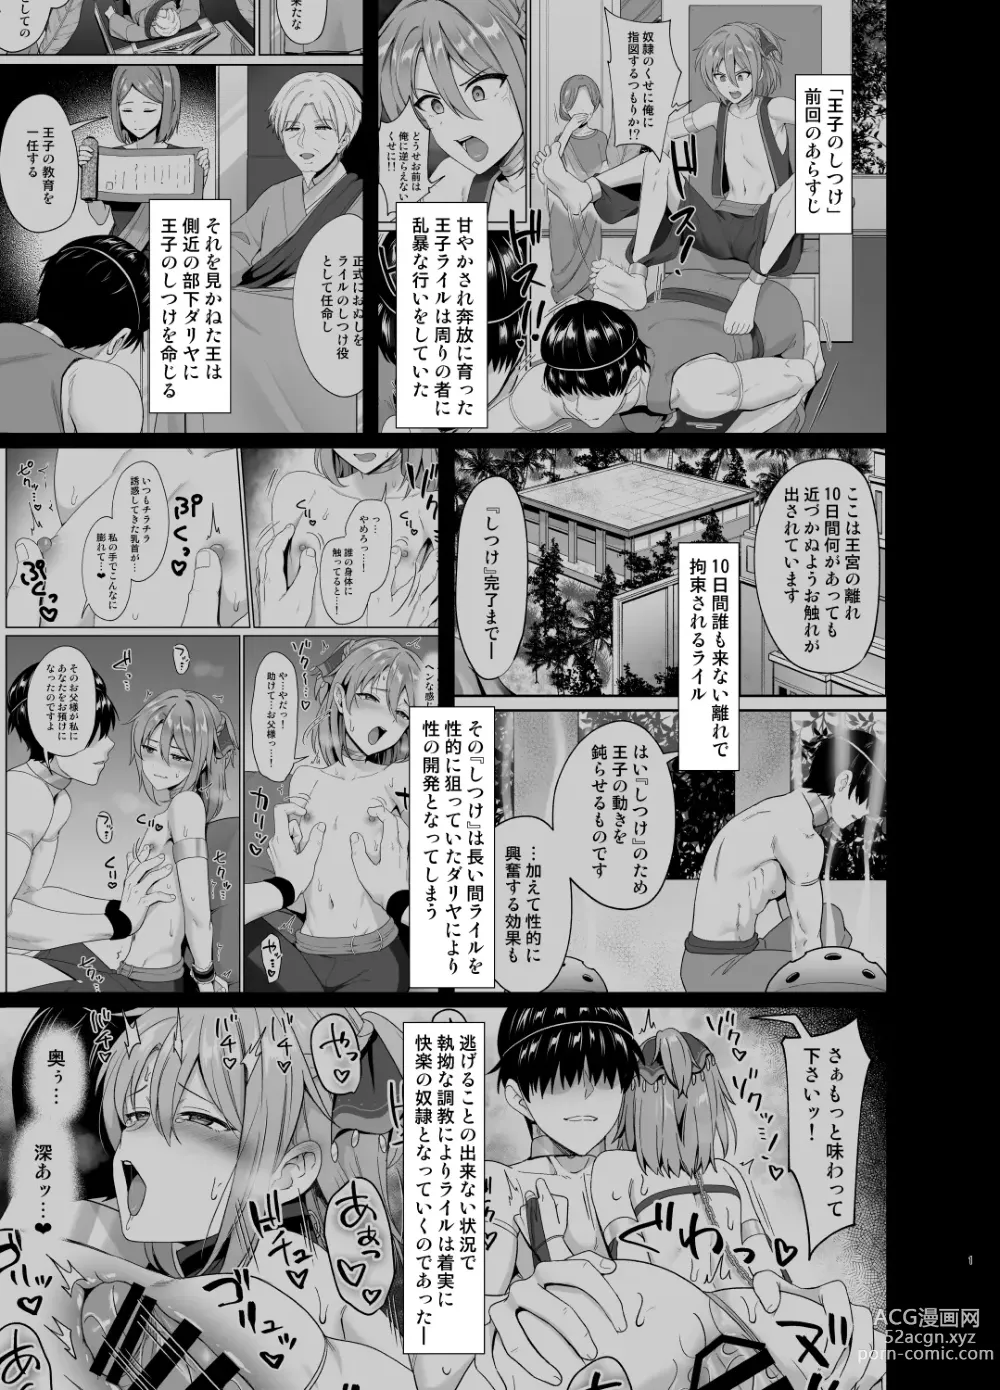 Page 2 of doujinshi Ouji no Shitsuke 2